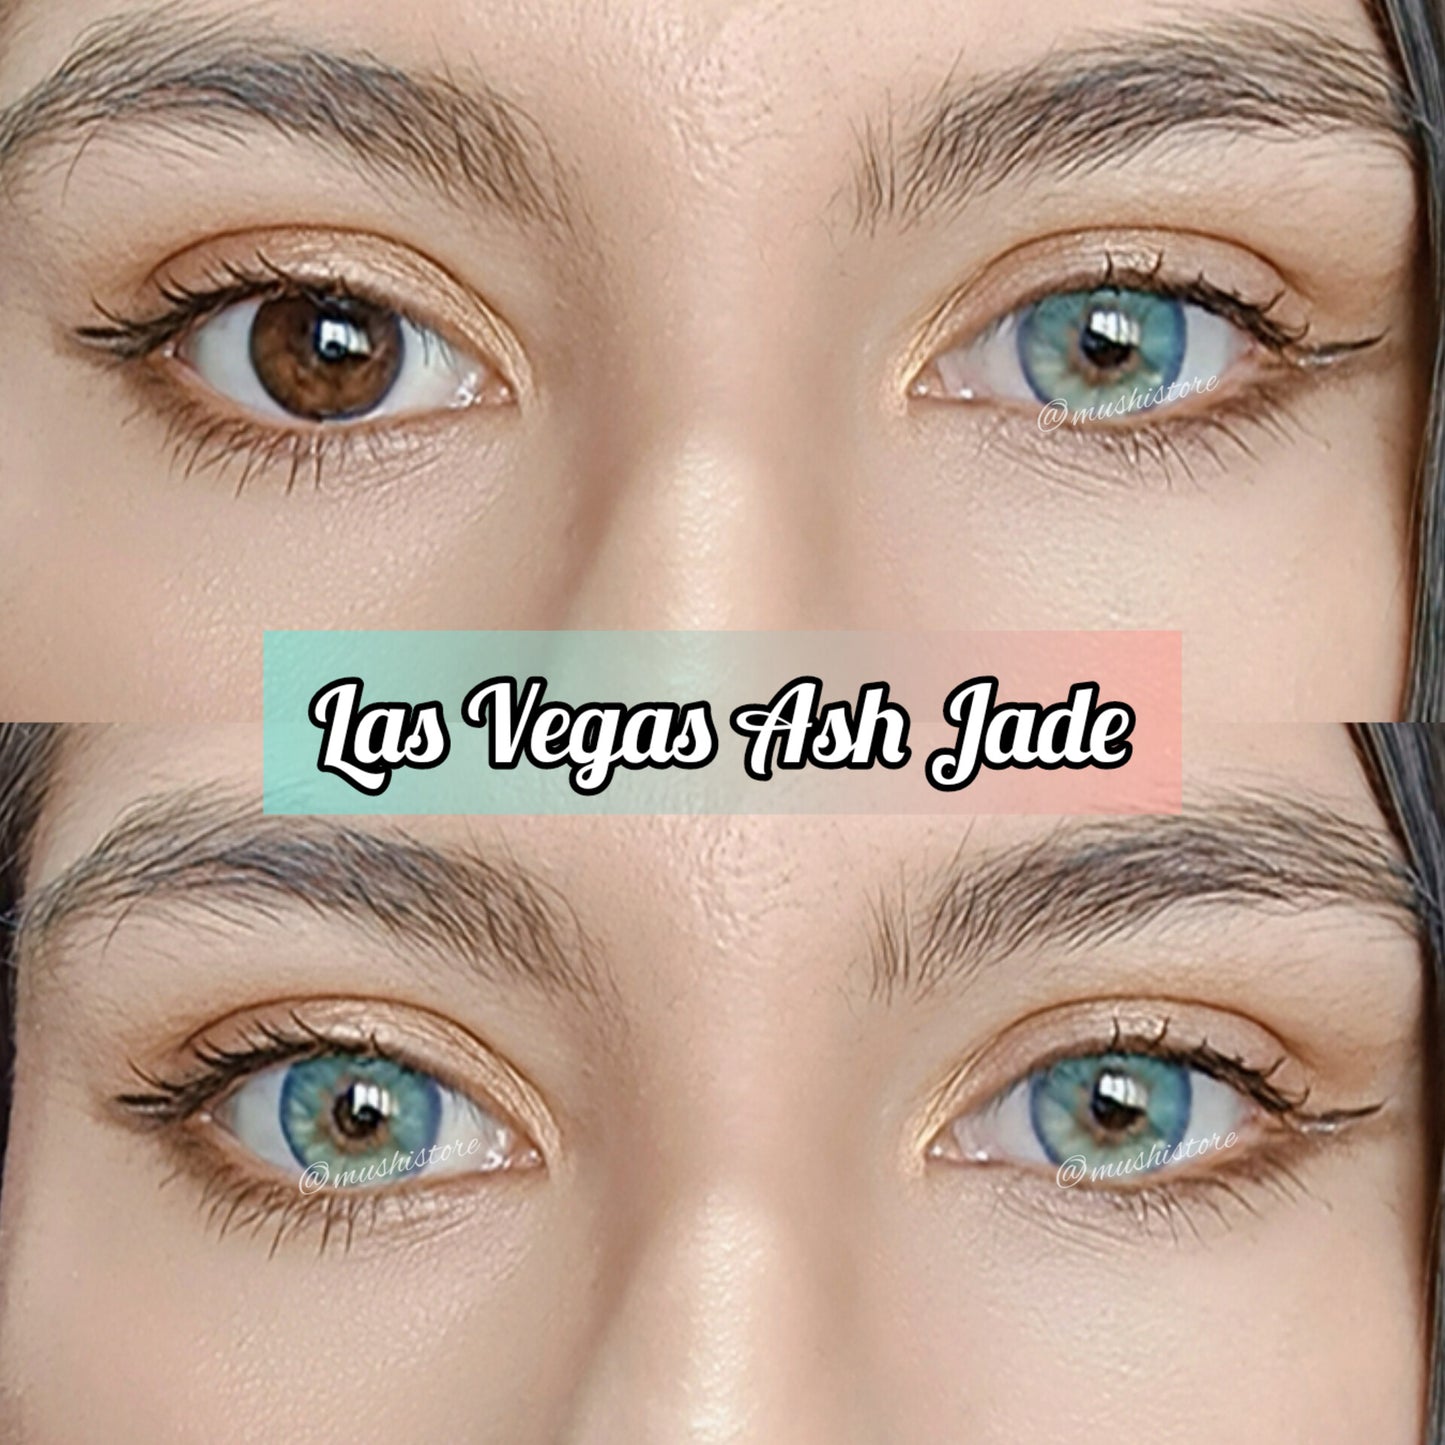 Las Vegas Ash Jade